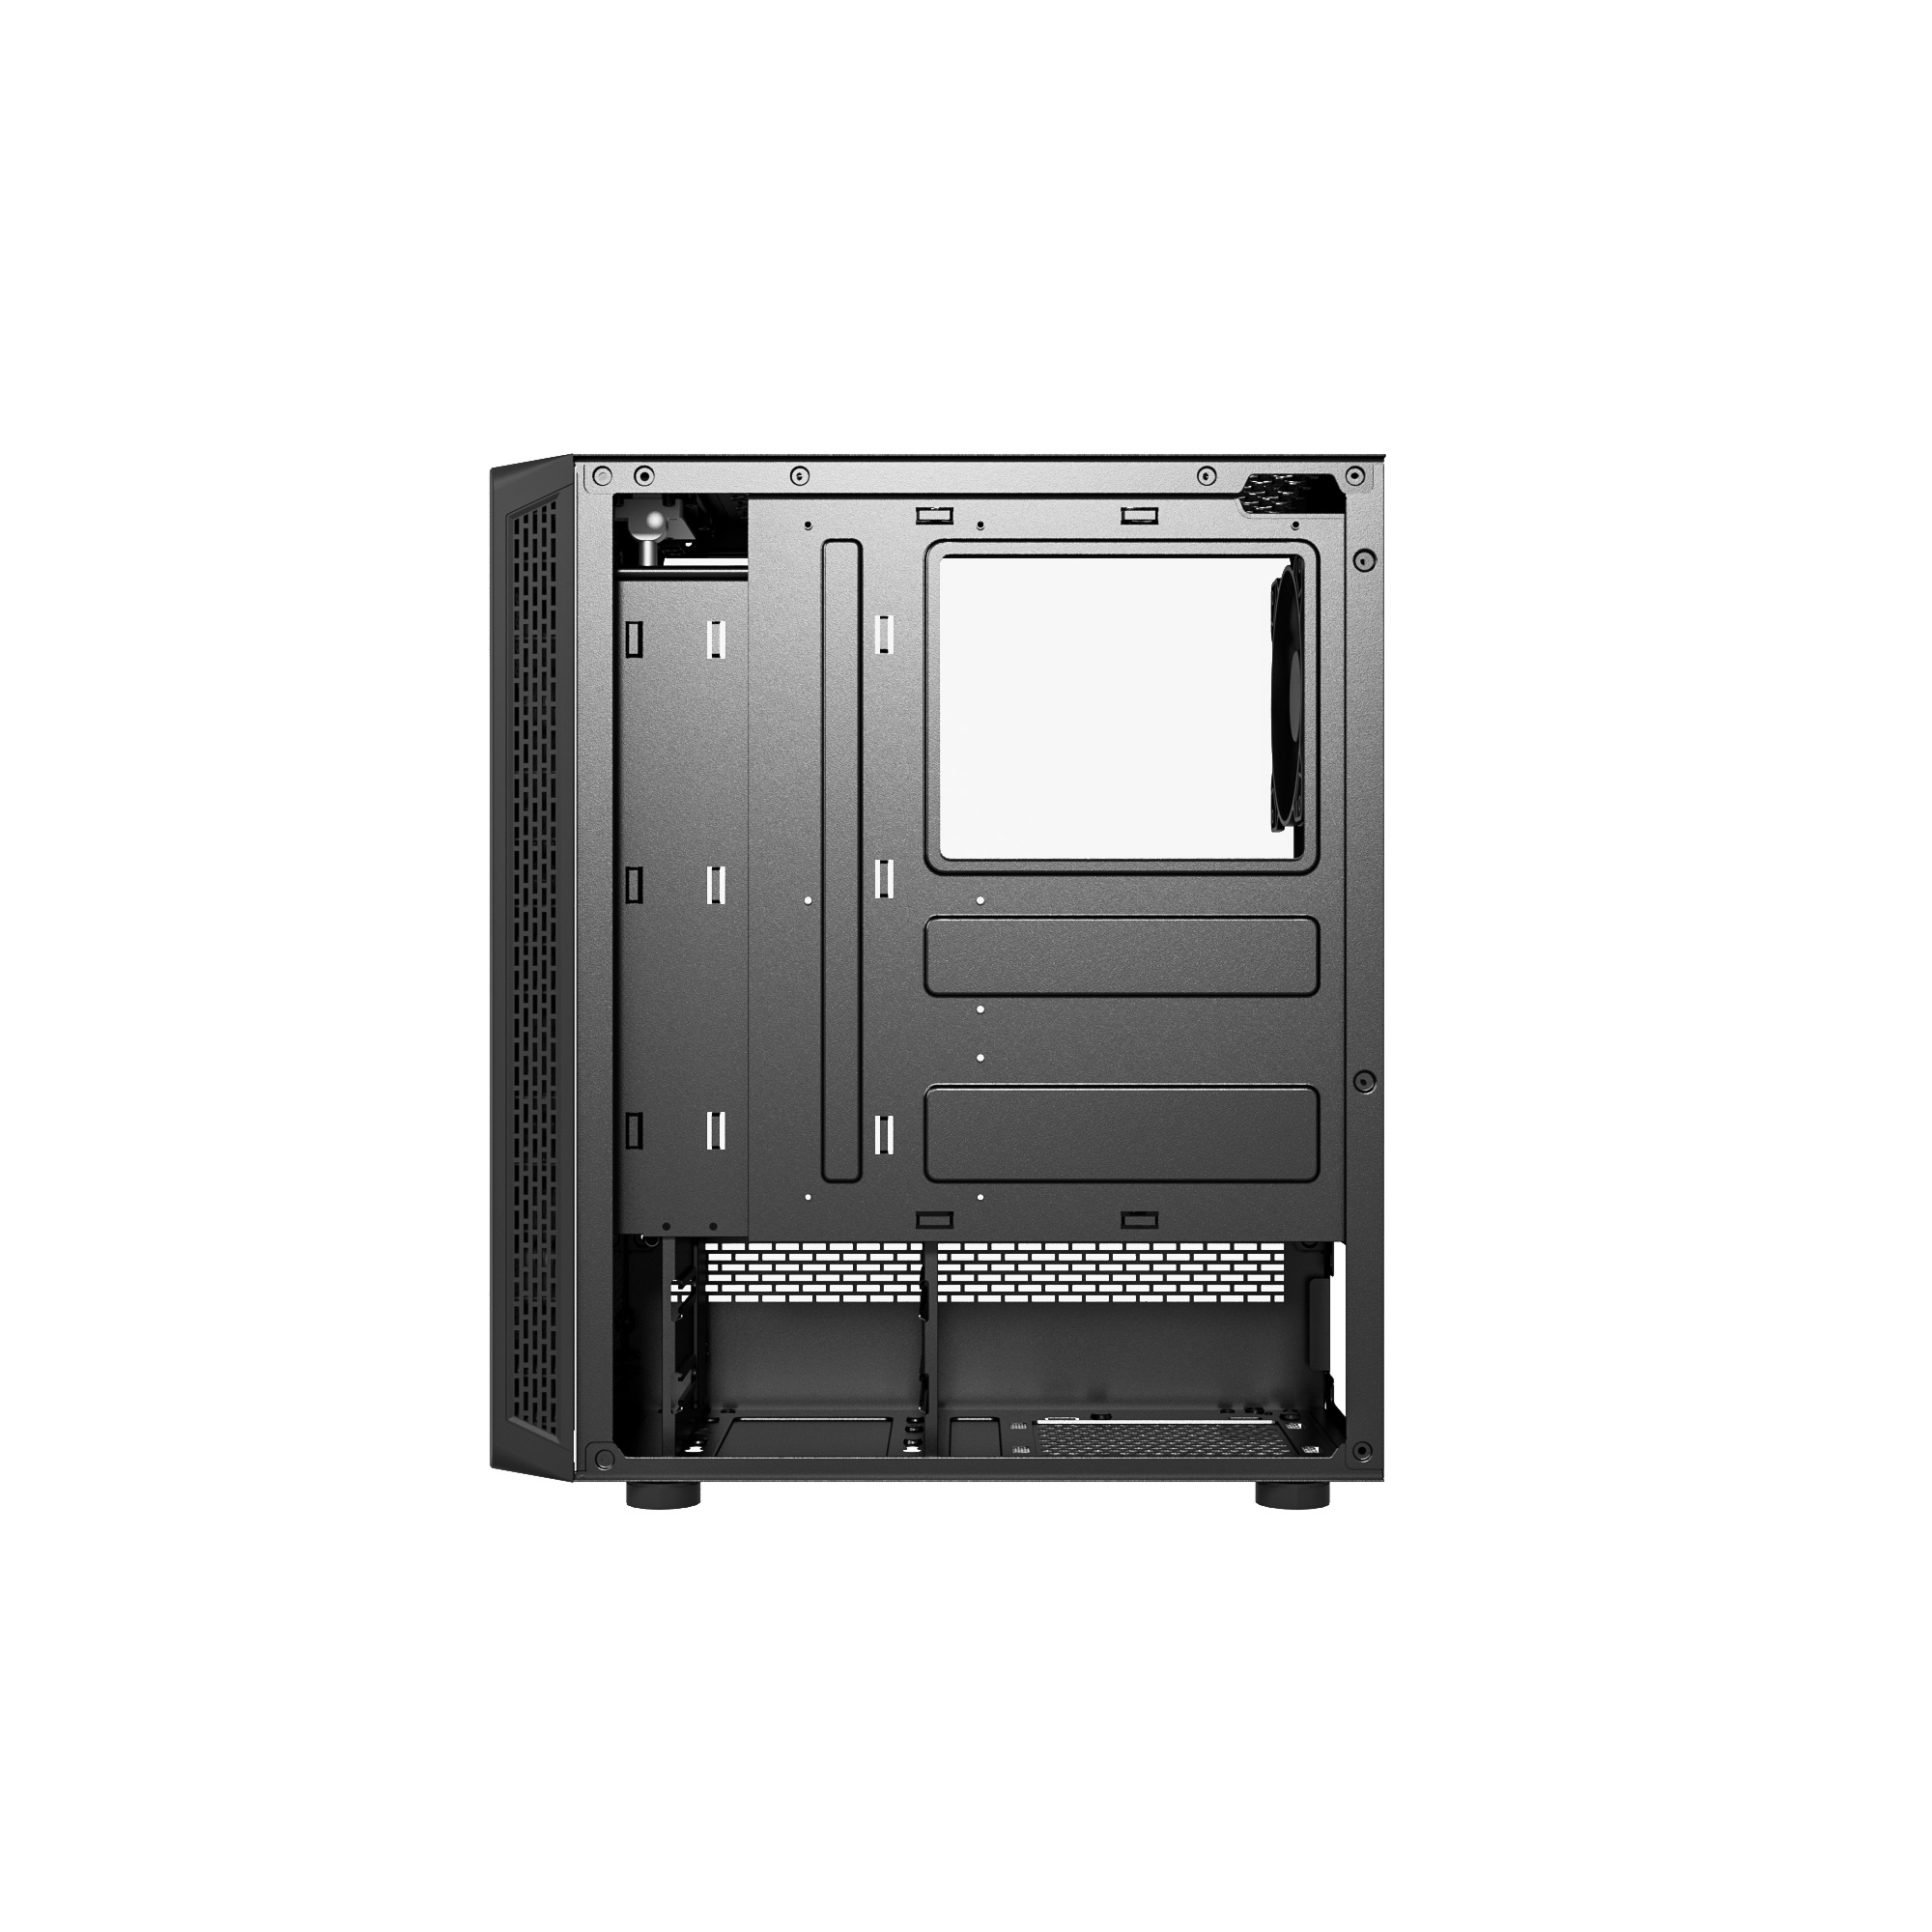 Корпус Powercase Mistral X4 Mesh, Tempered Glass, 4x 120mm fan, чёрный, ATX  (CMIXB-F4)